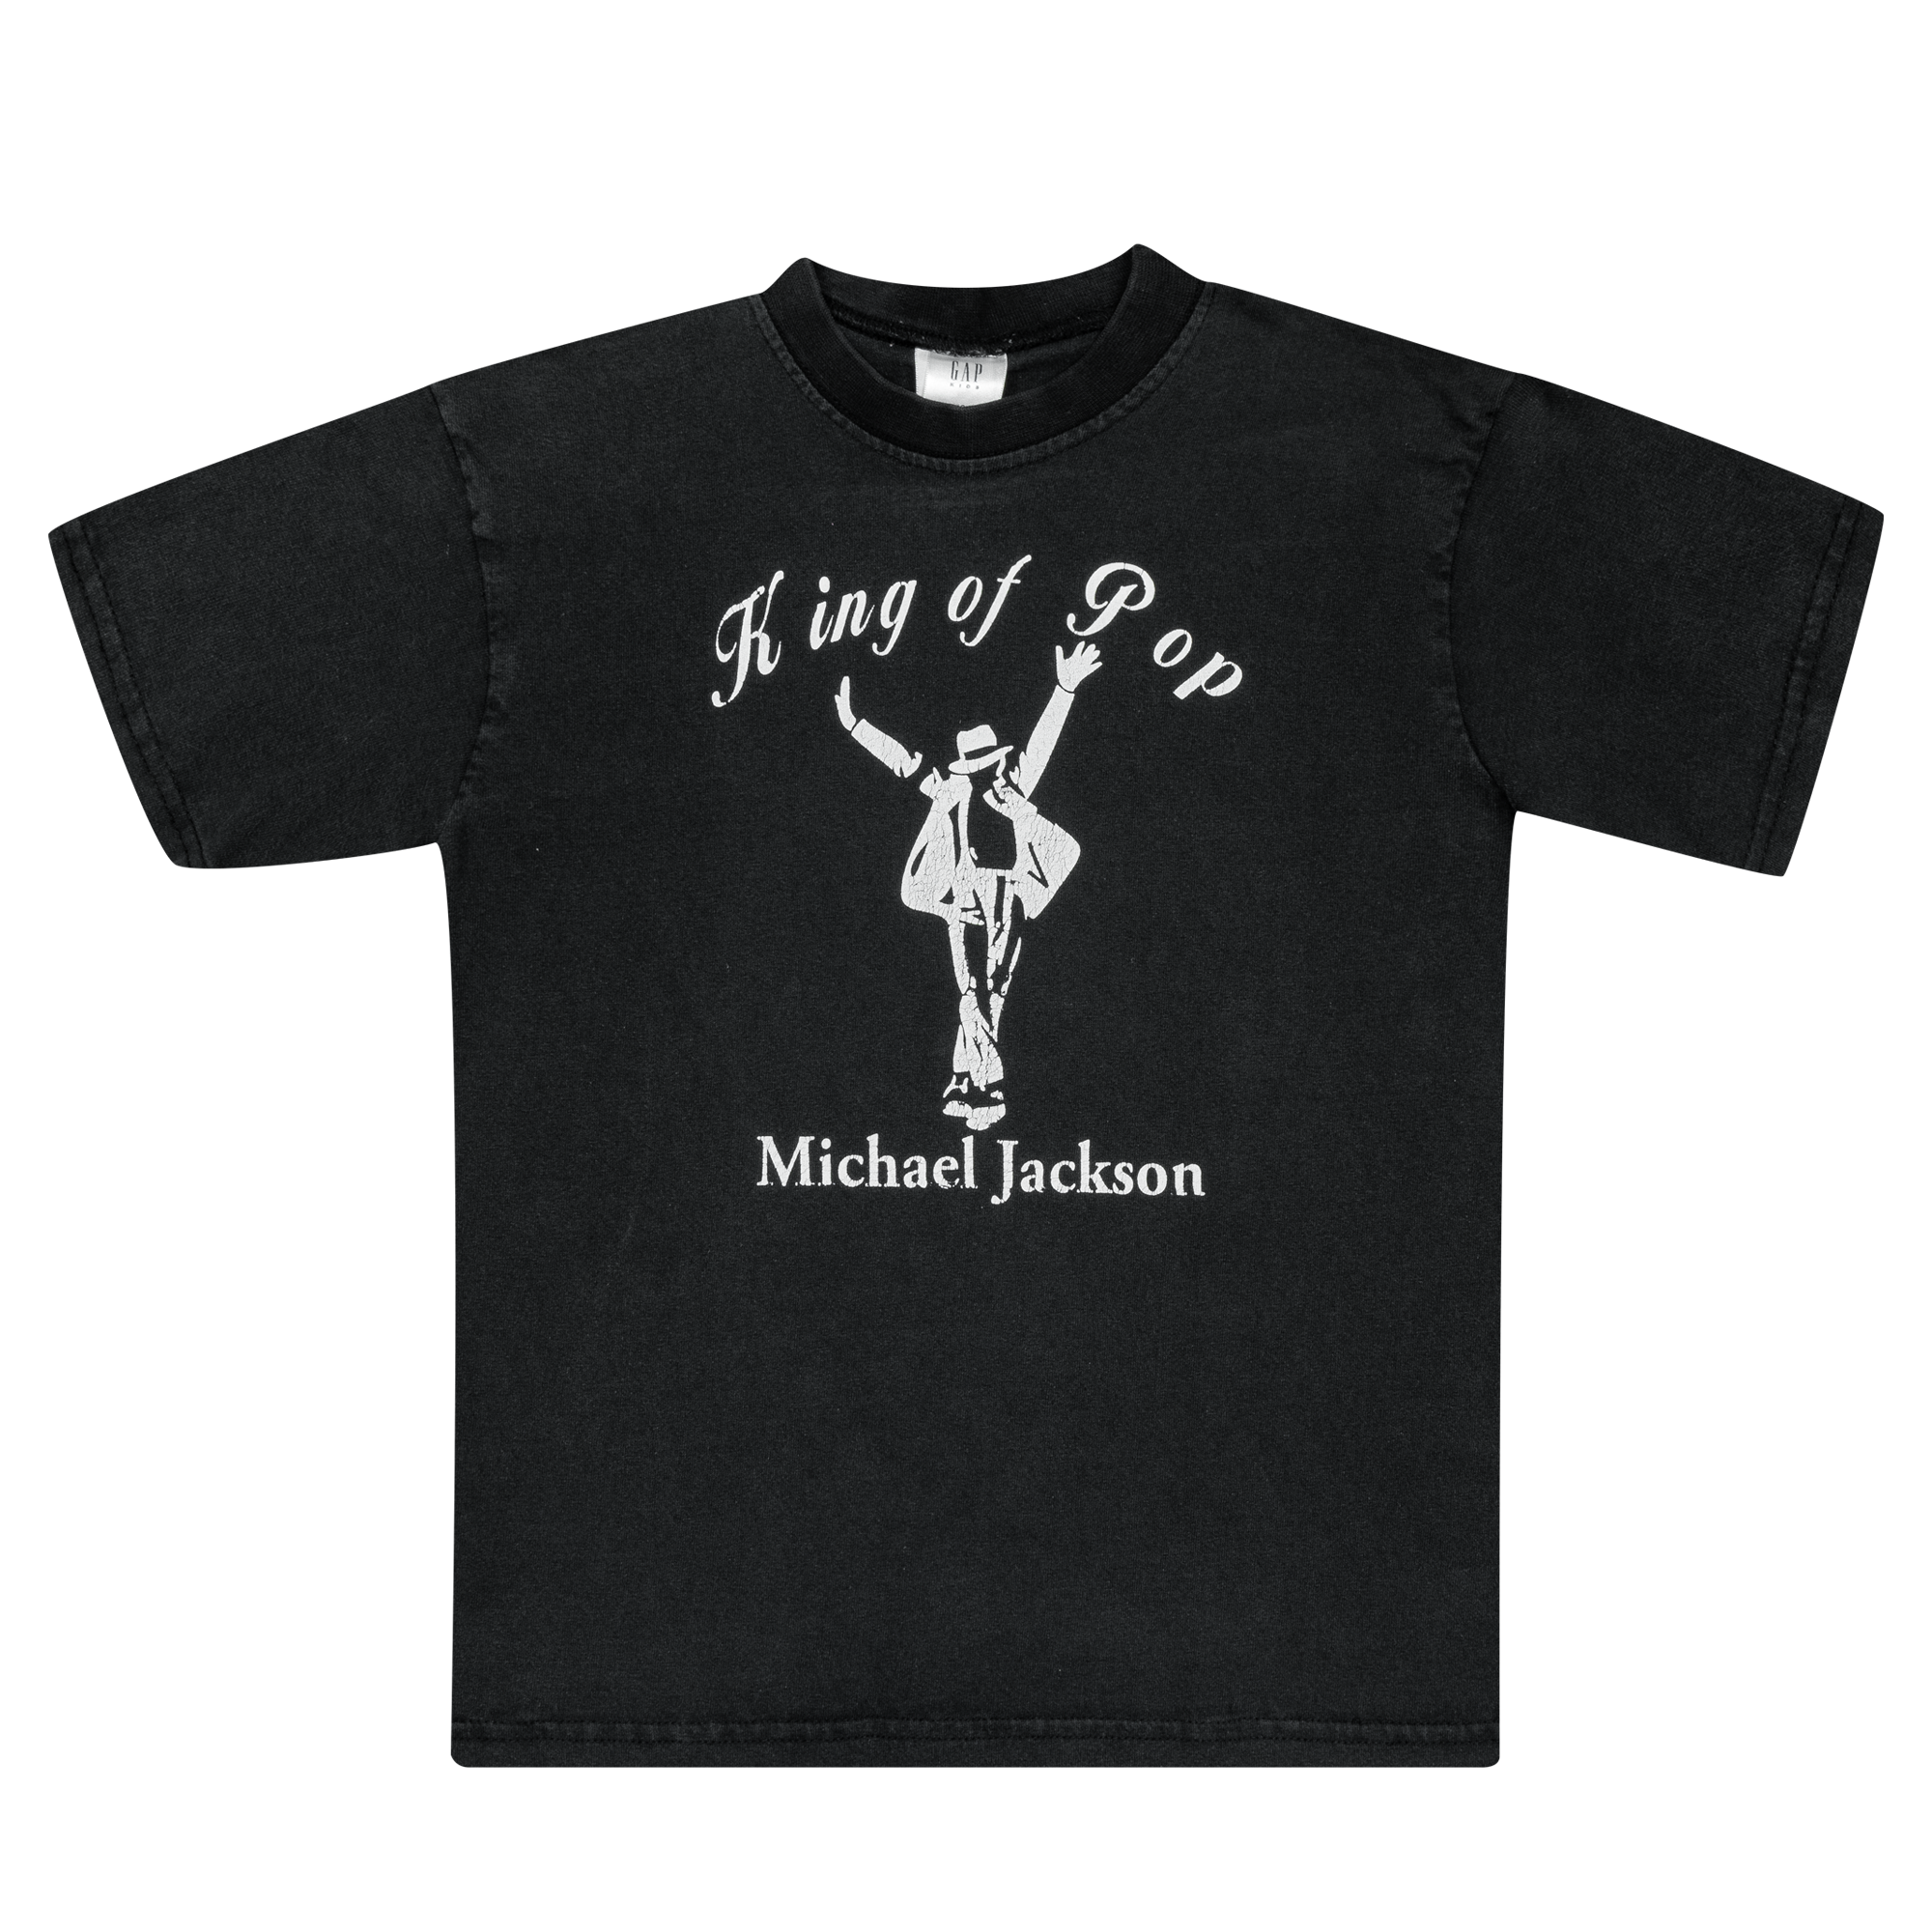 Michael Jackson "King Of Pop" Tee Black-PLUS